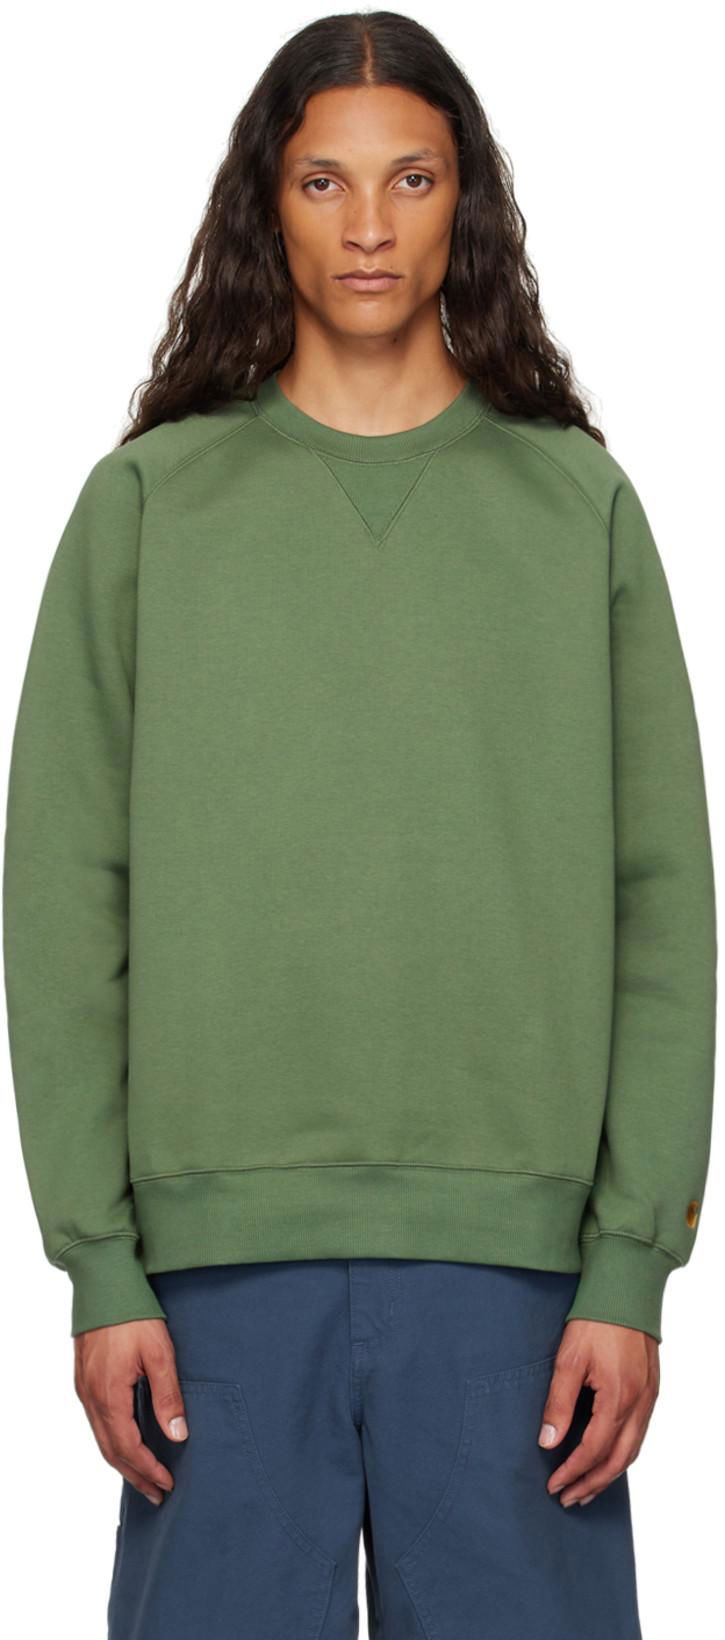 Green Chase Sweatshirt by CARHARTT WIP